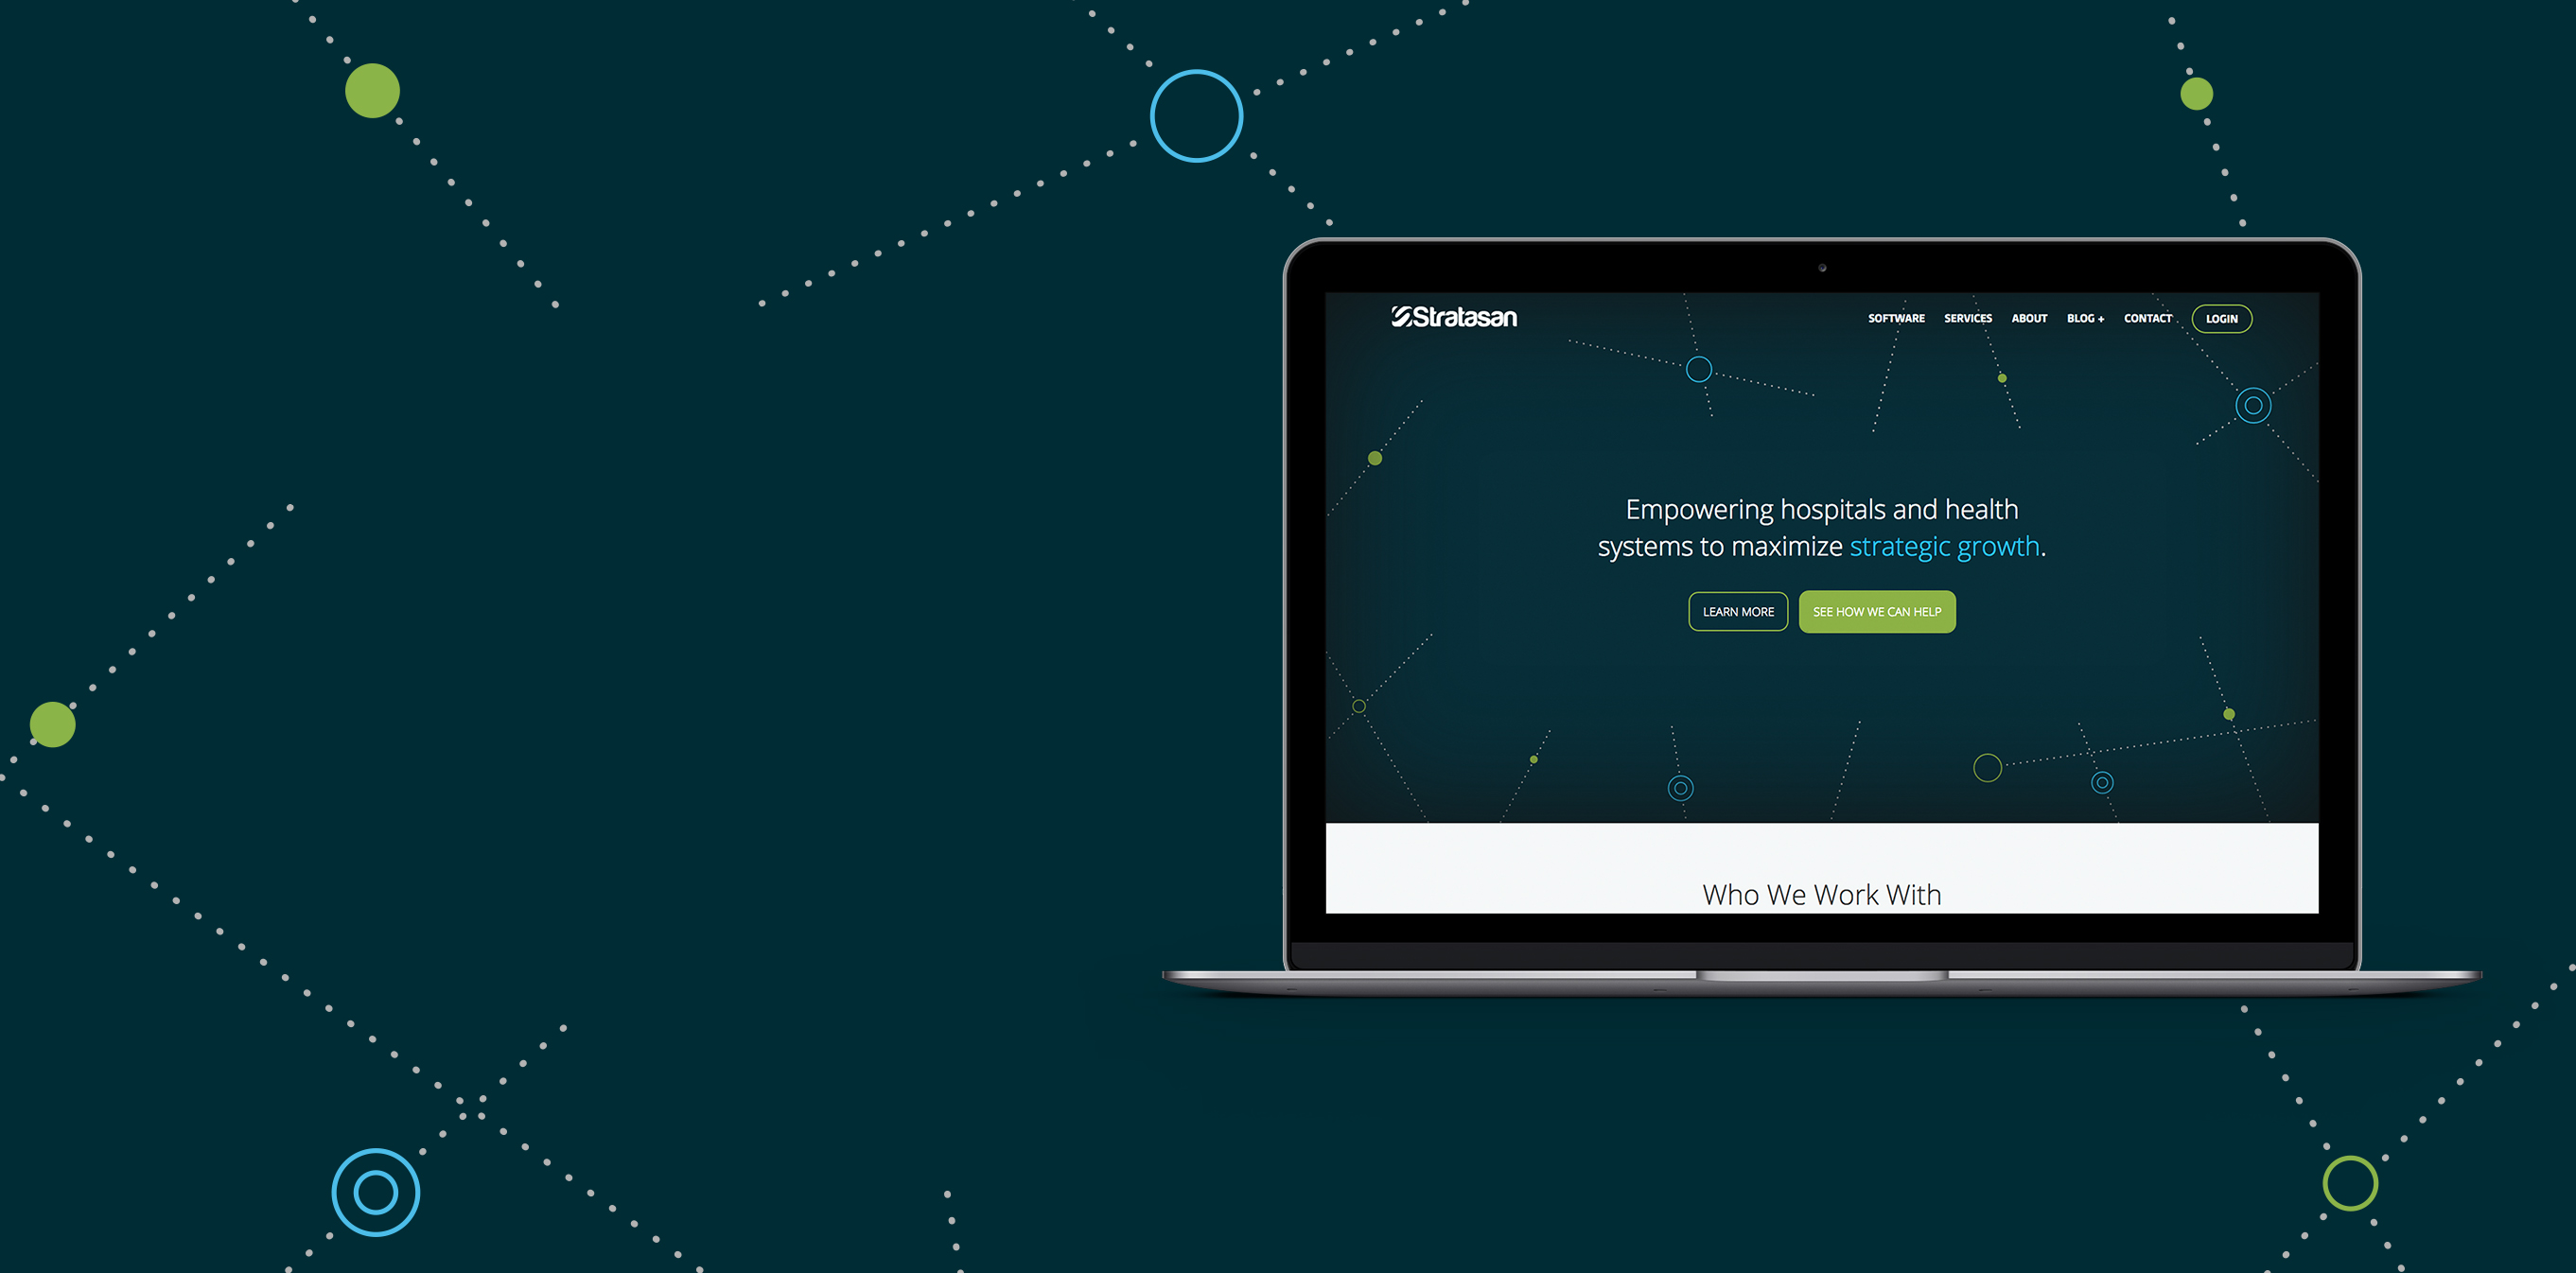 Innovative Nashvile Healthcare Company Website Design for Stratasan by DesignUps